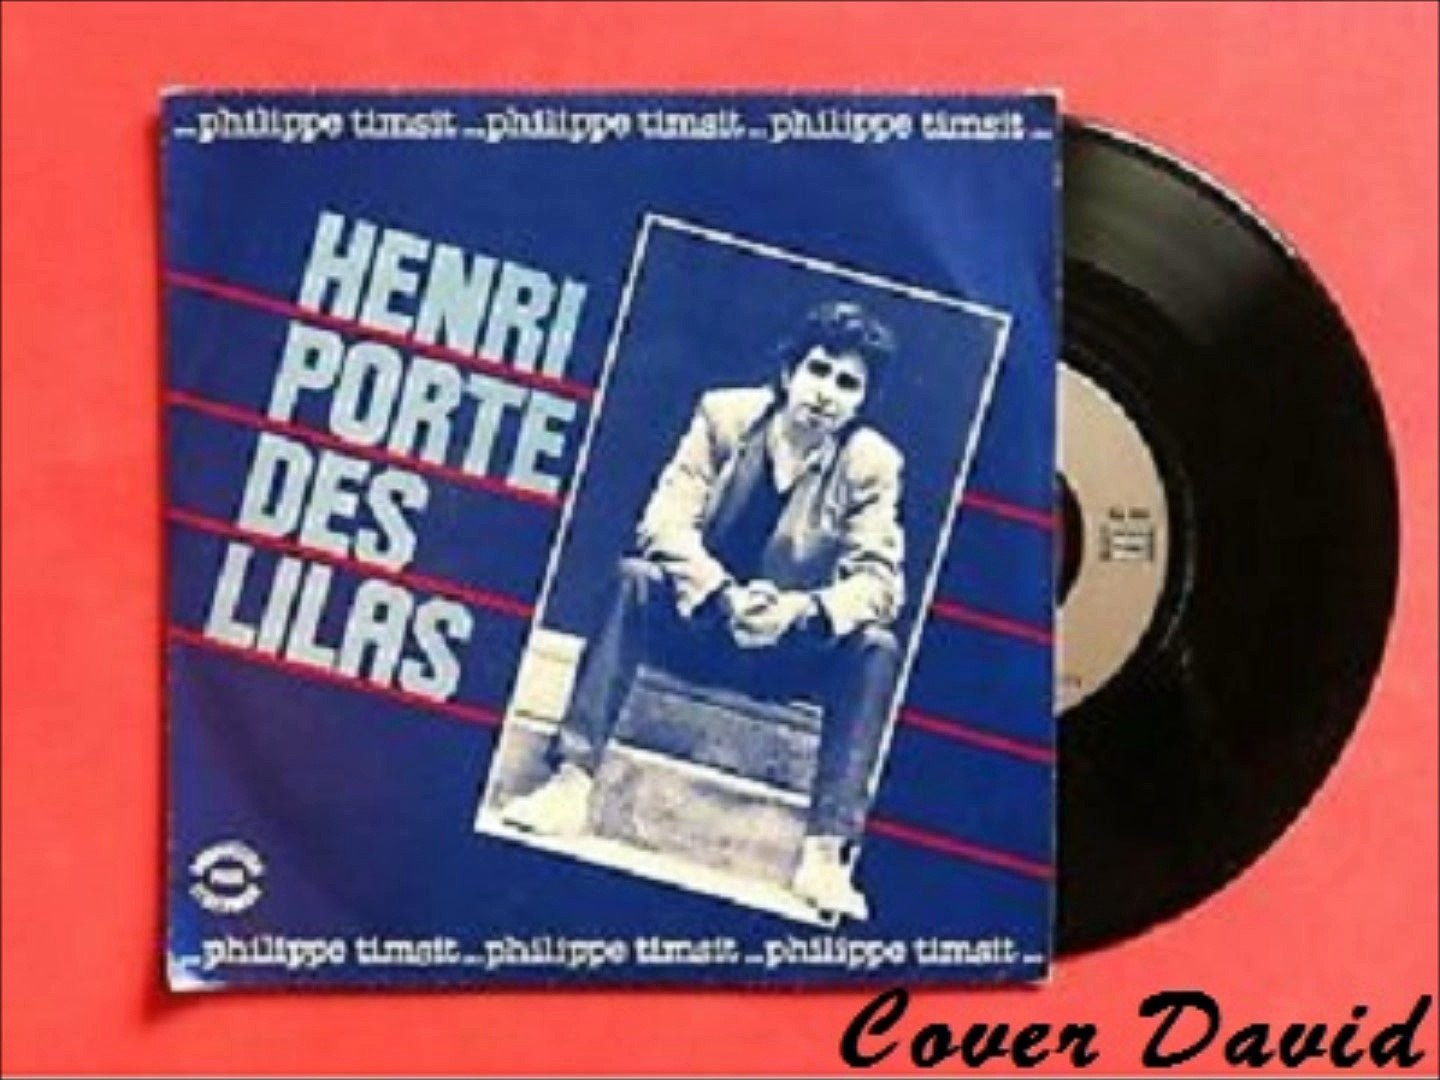 Philippe Timsit - Henri porte des lilas Cover David - Vidéo Dailymotion